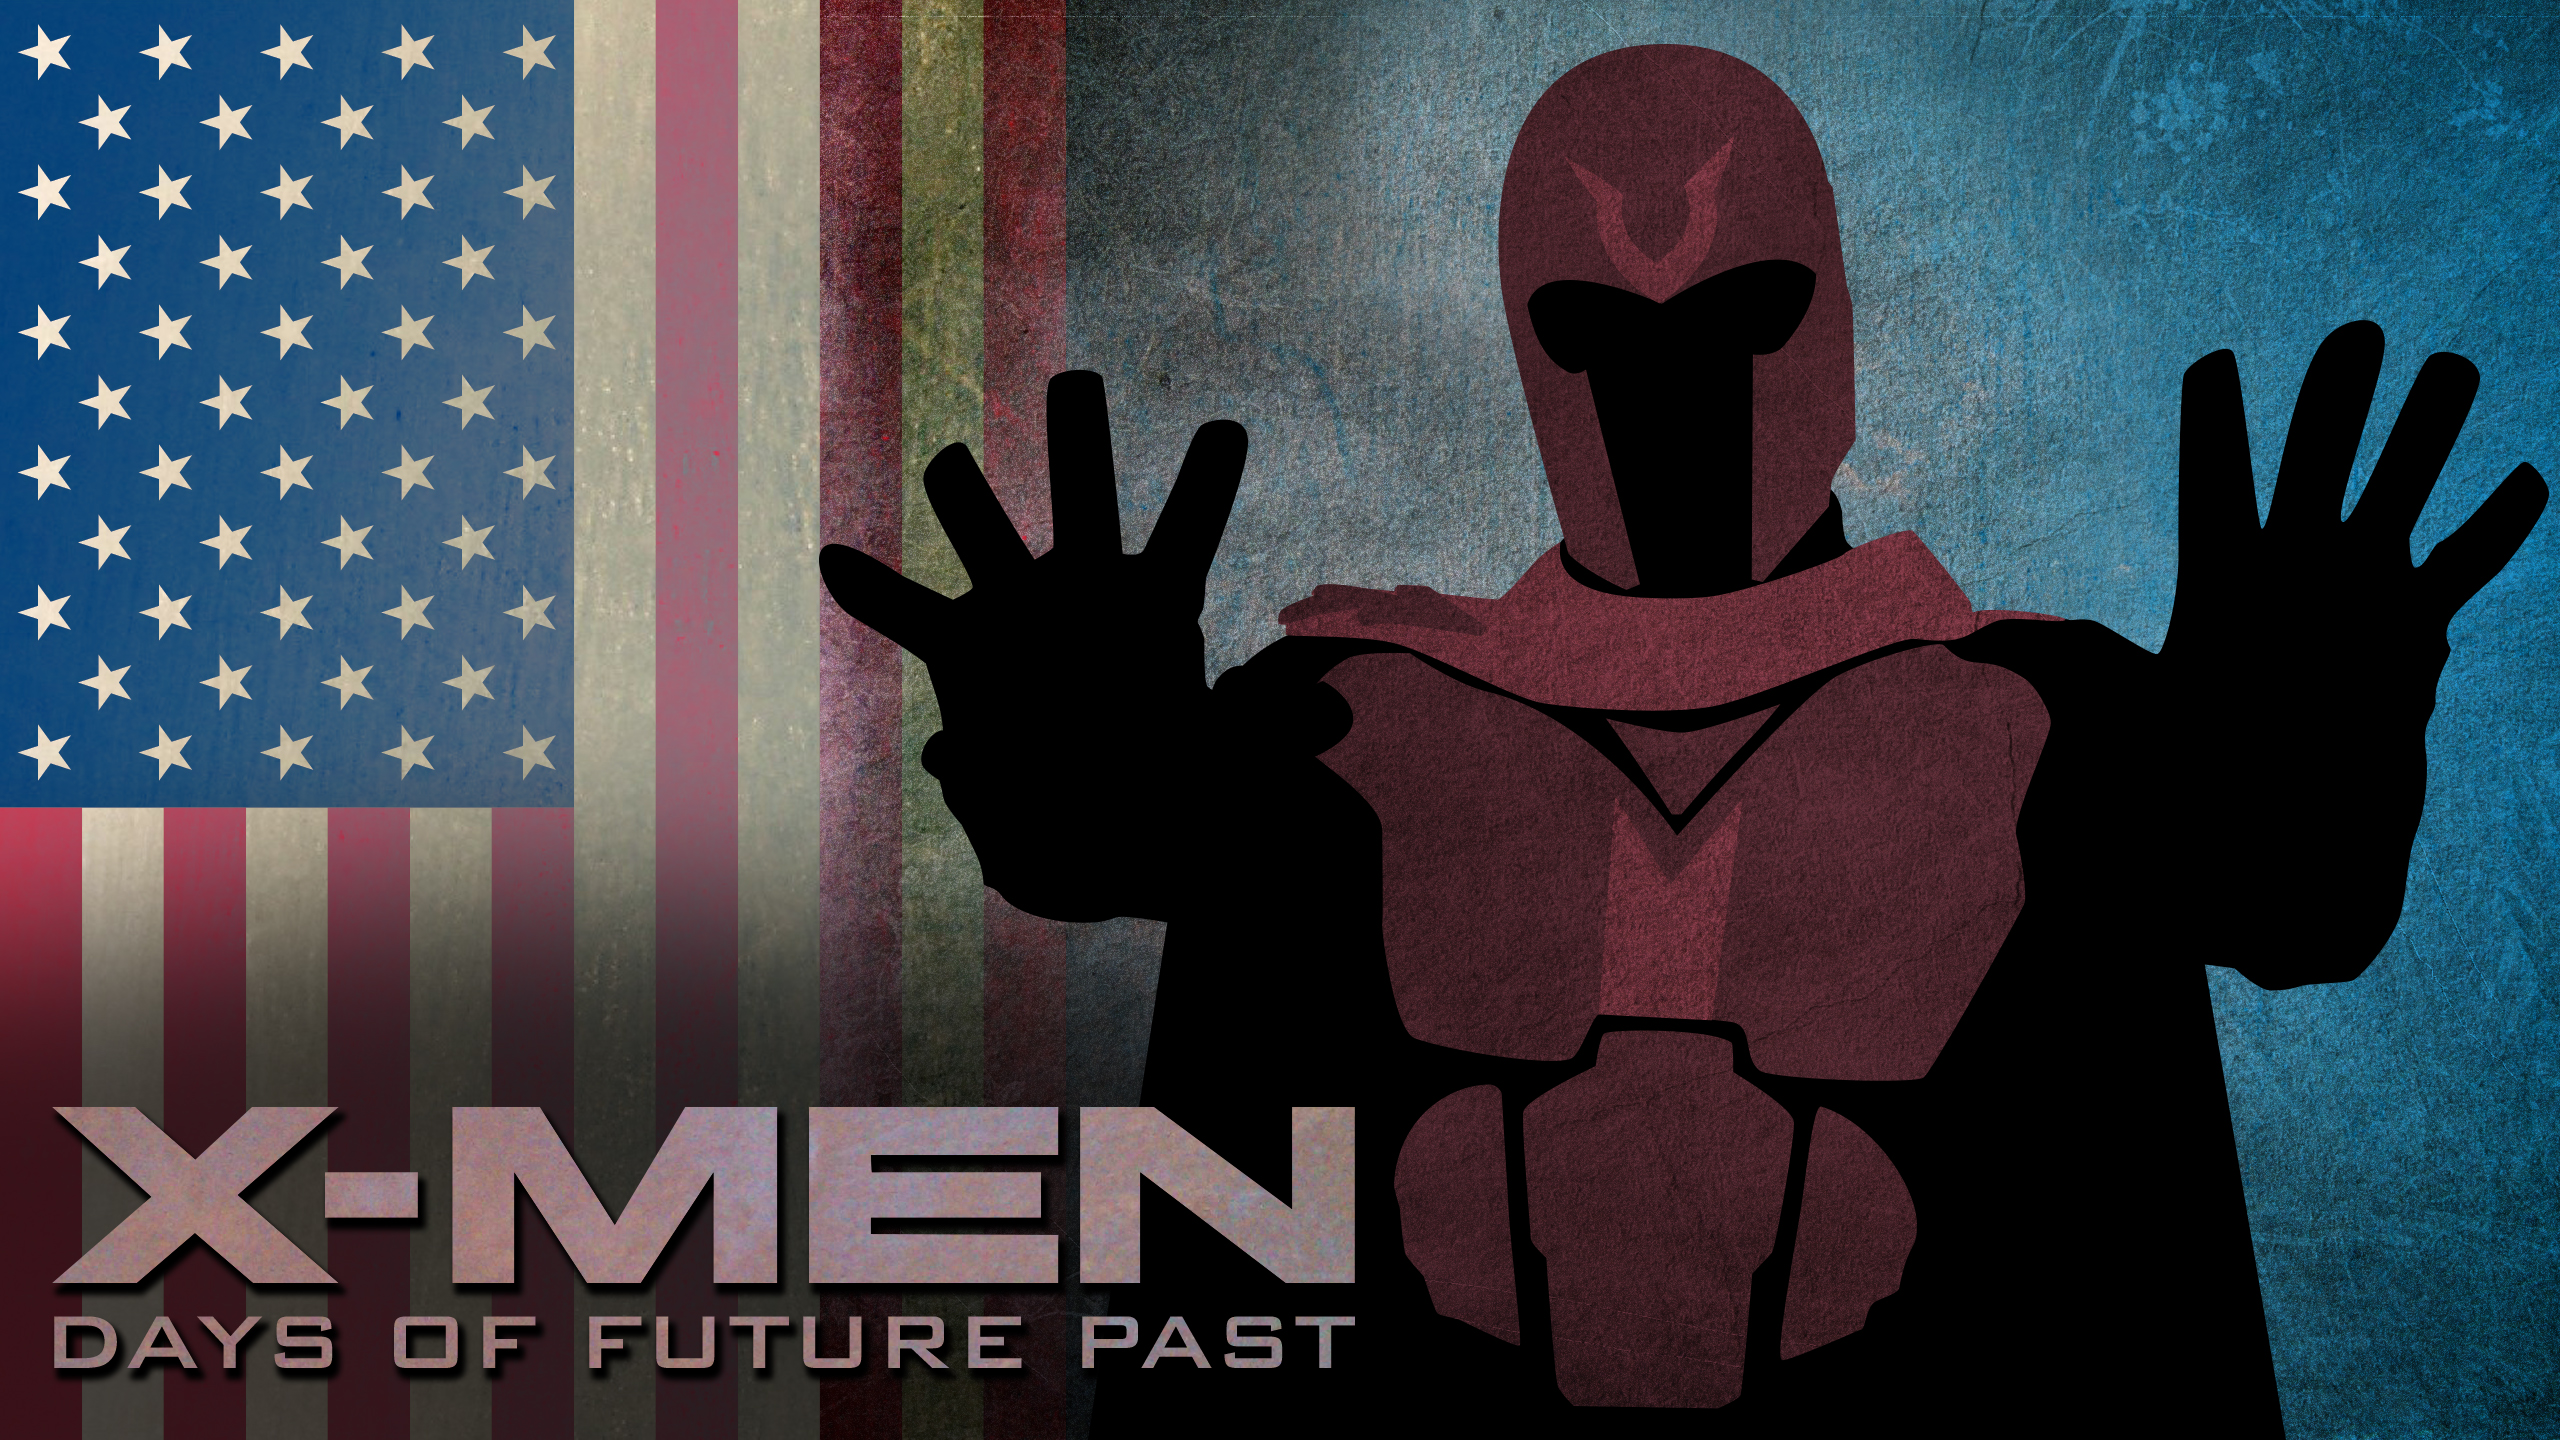 X-MEN Days of Future Past - Magneto Wallpaper by M-Kow on DeviantArt